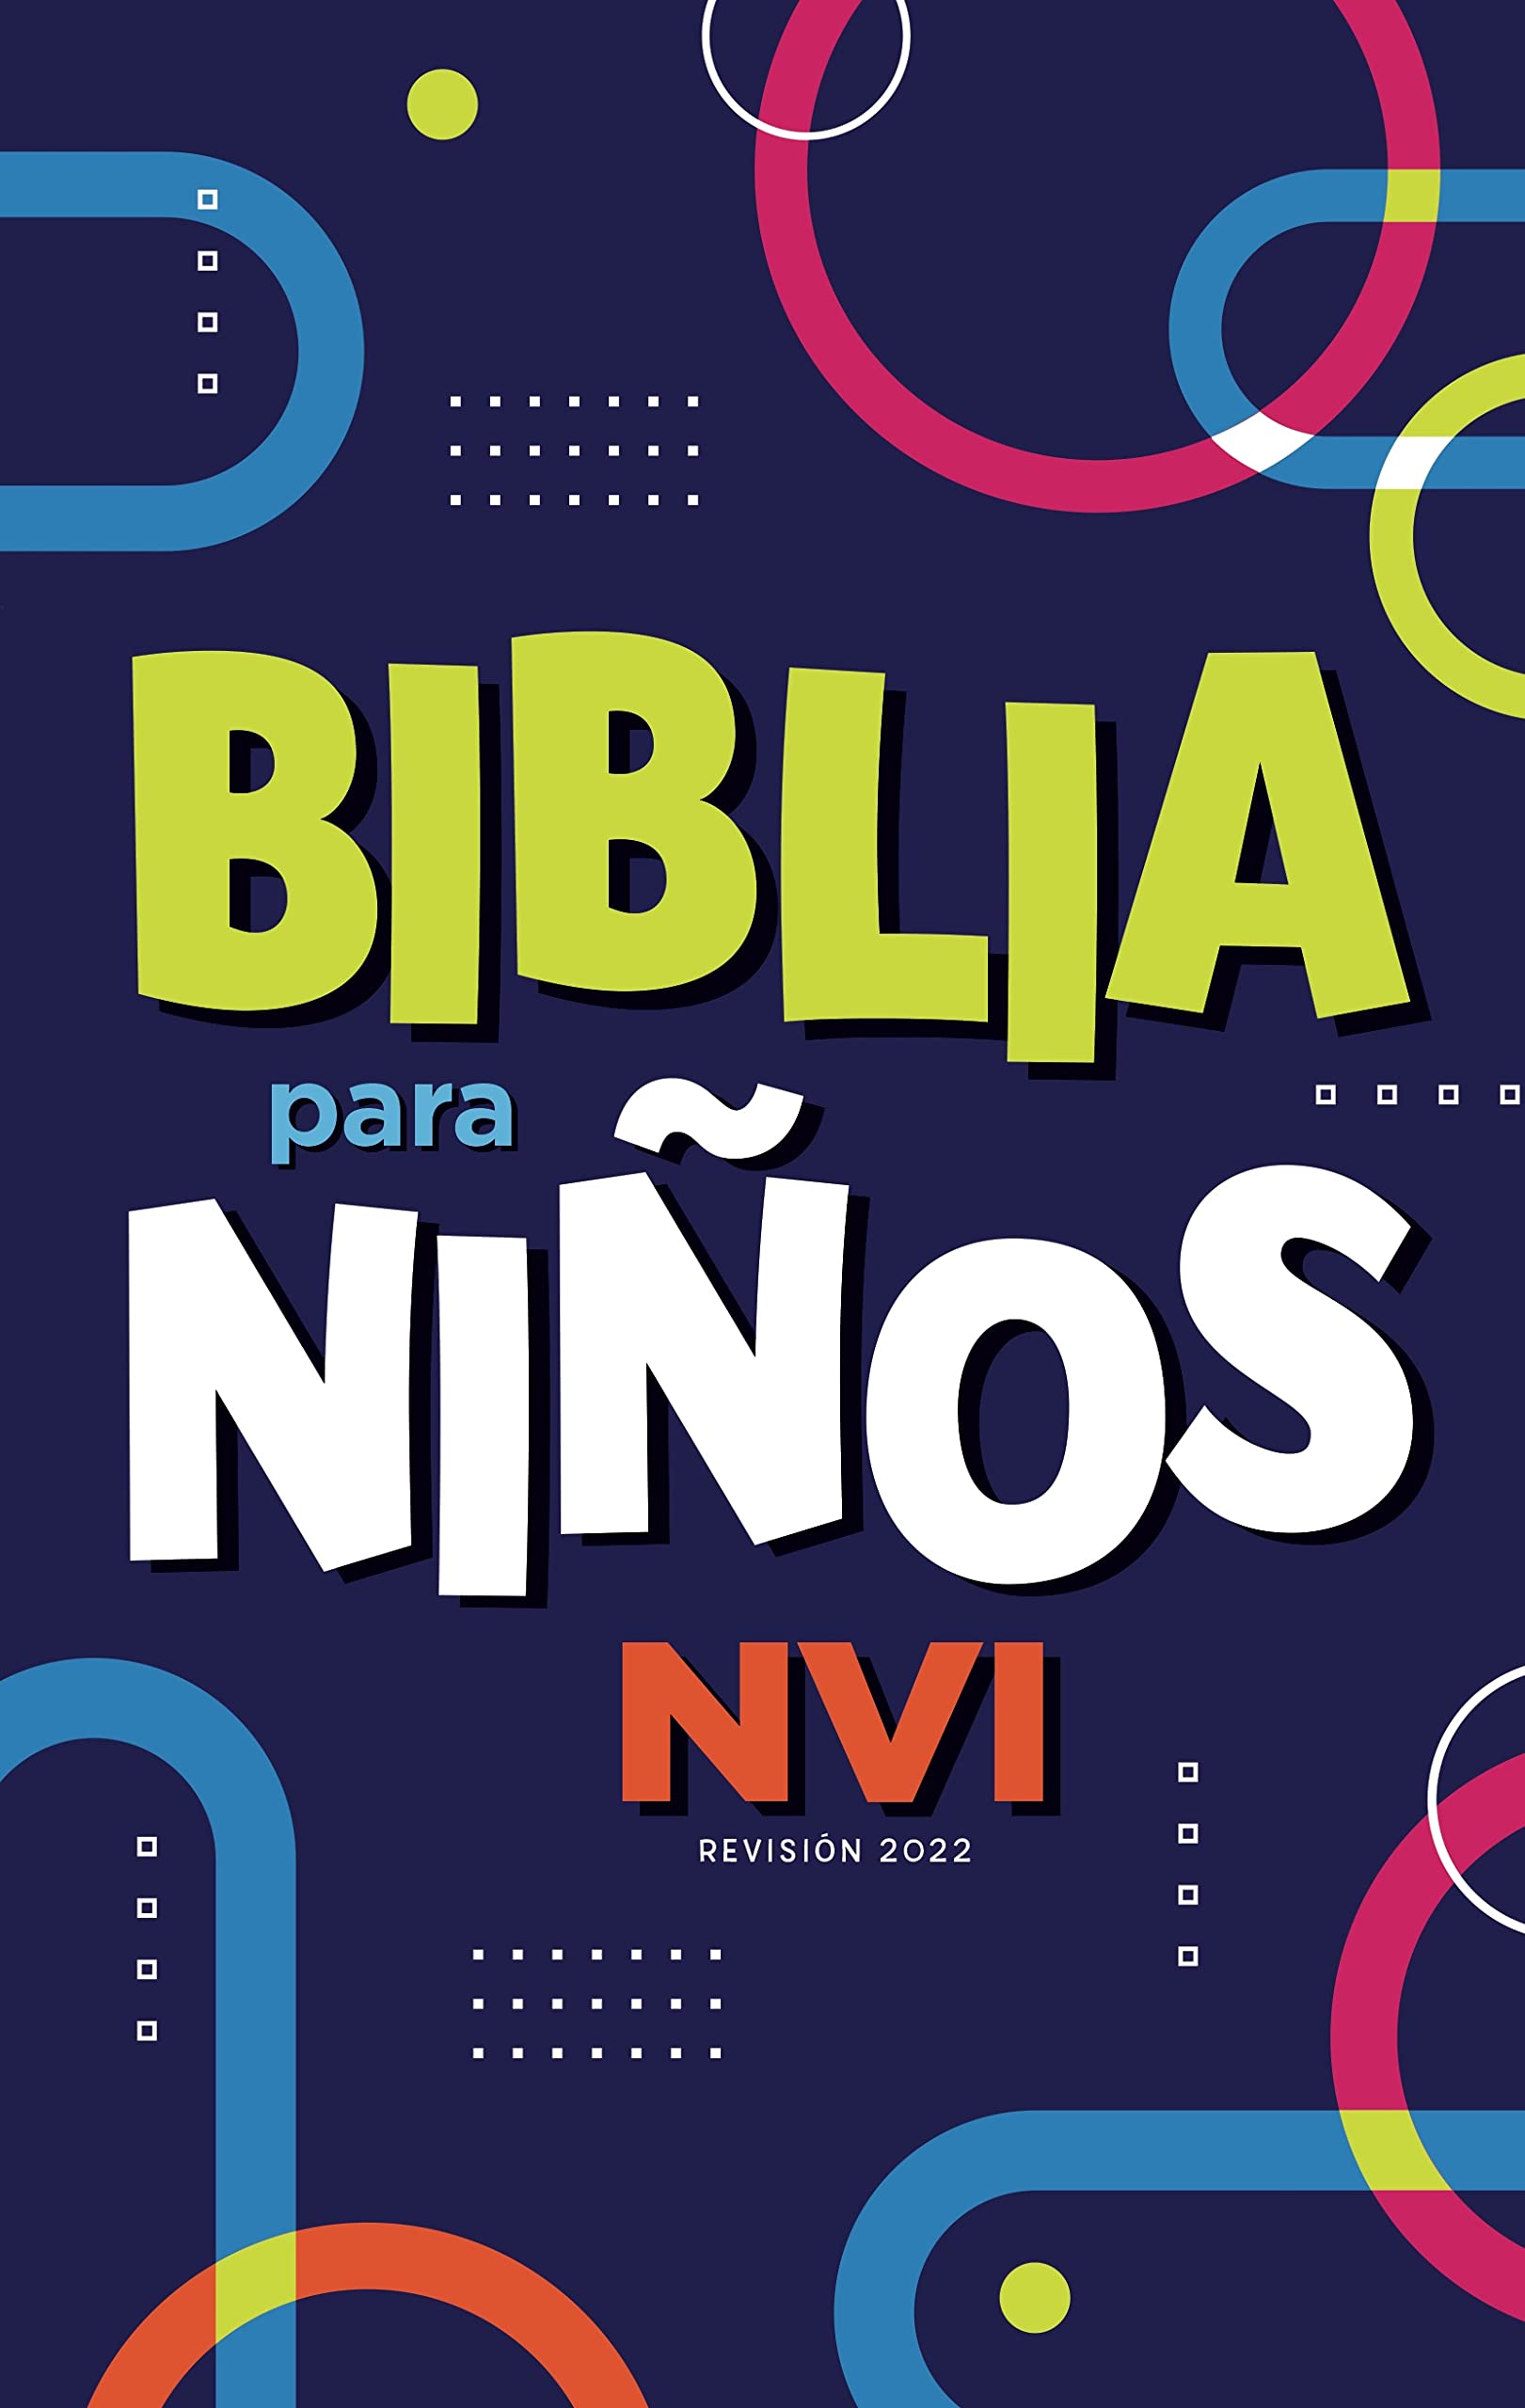 Biblia para Niños NVI, Texto revisado 2022, Tapa dura, Comfort Print